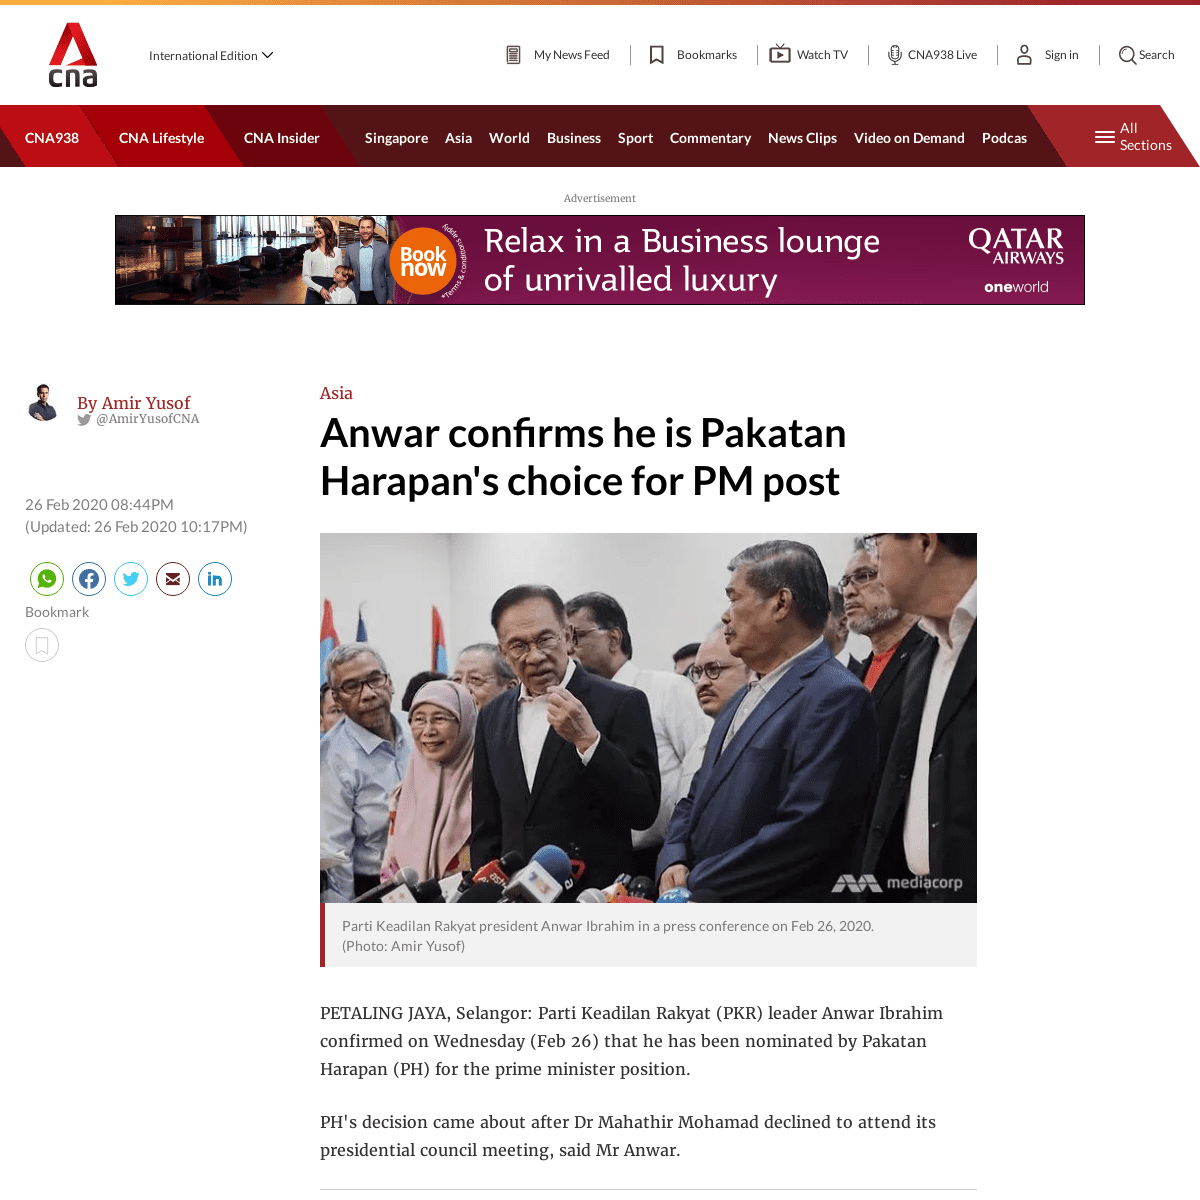 A complete backup of www.channelnewsasia.com/news/asia/malaysia-pakatan-harapan-anwar-prime-minister-mahathir-12472036